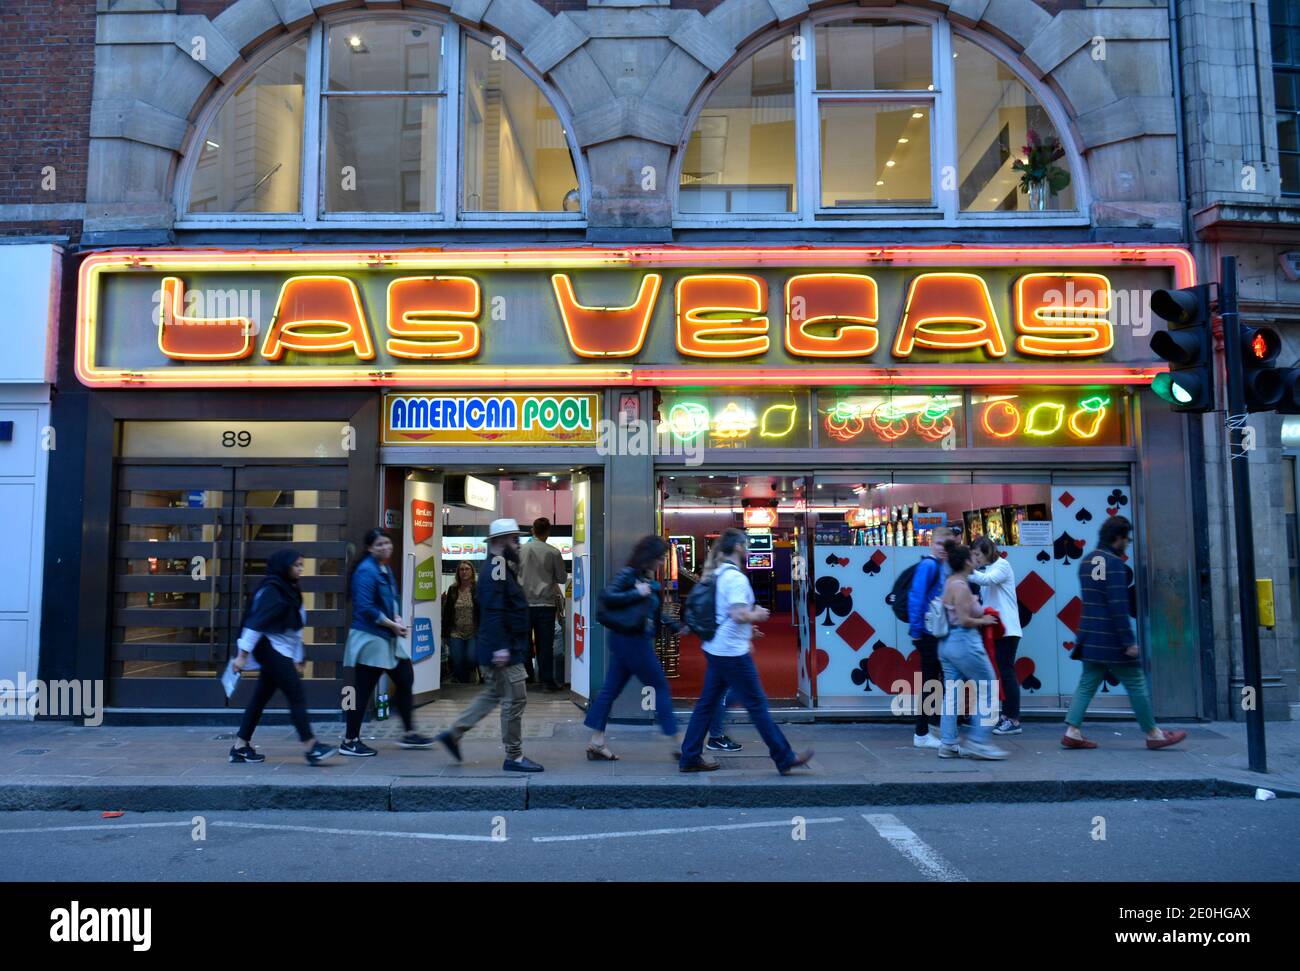 Las Vegas Arcade, Wardour St, Soho, Londra, Inghilterra, Grossbritannien Foto Stock